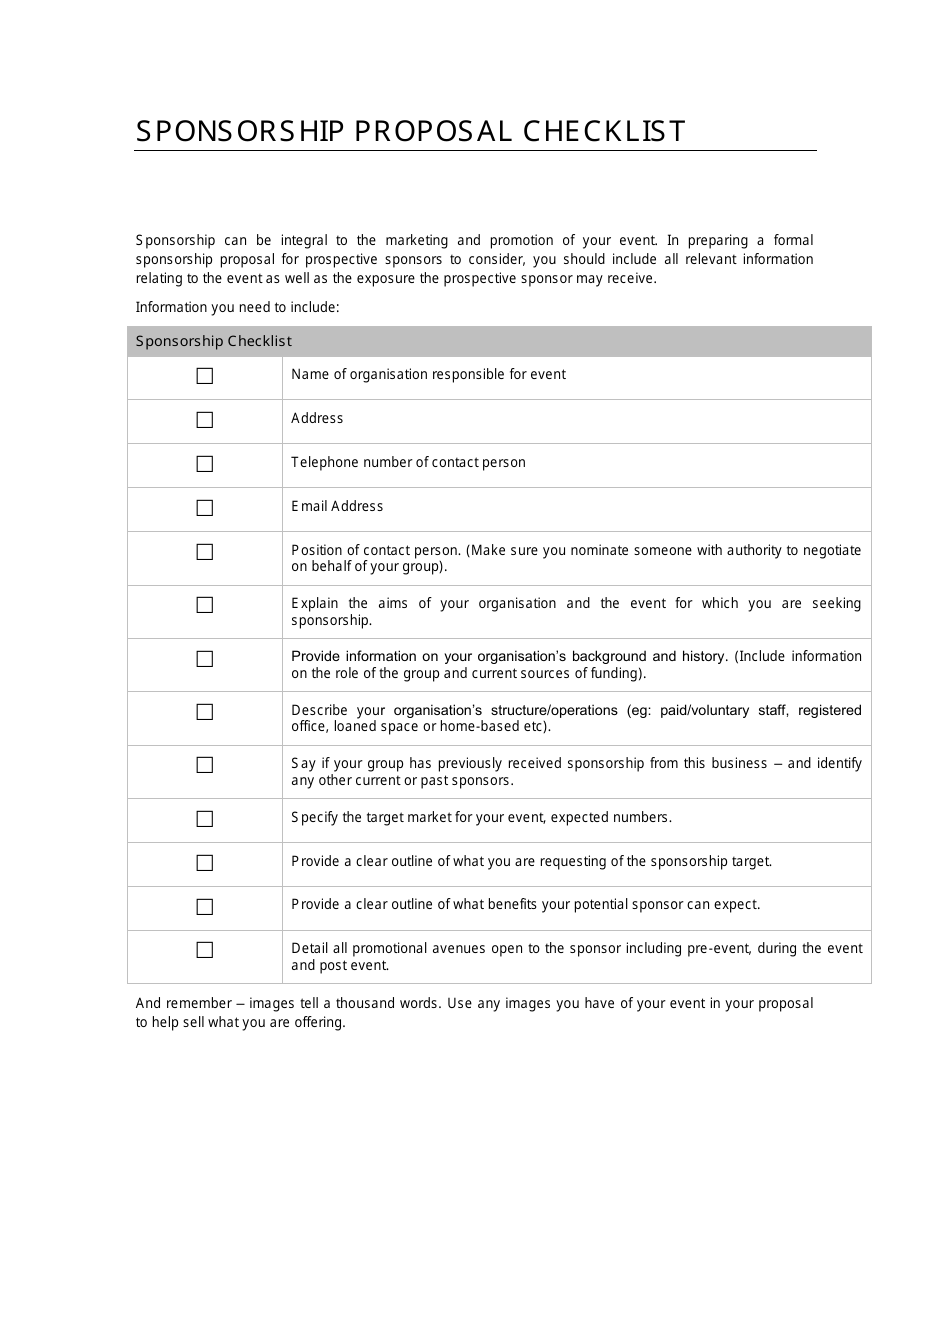 Sponsorship proposal checklist template preview